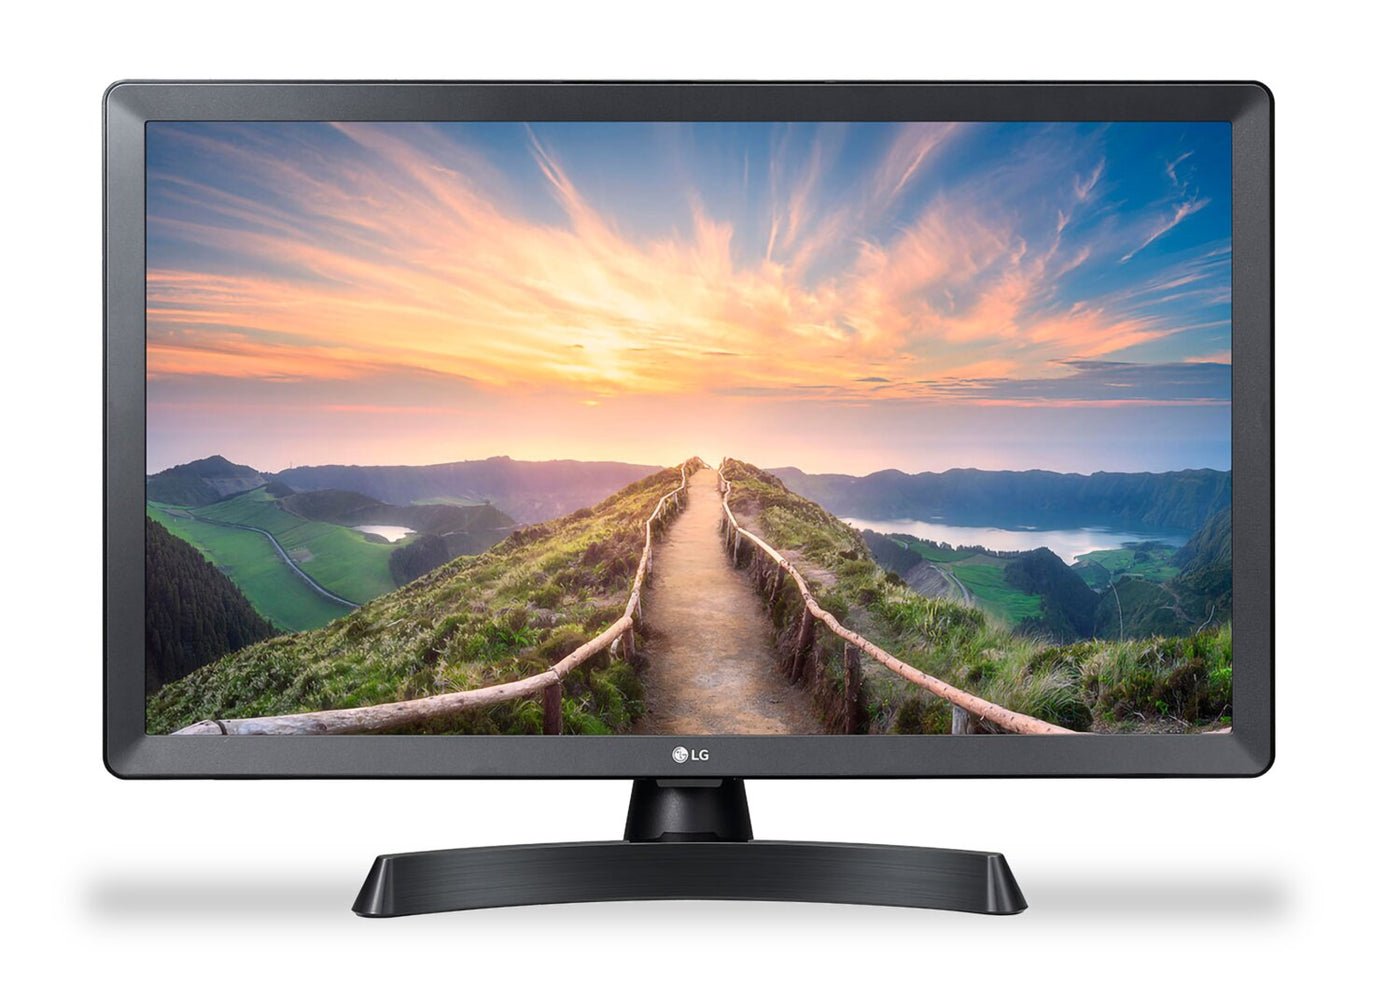 LG 24 720p HD Smart TV/Computer Monitor - 24LM530S-PU